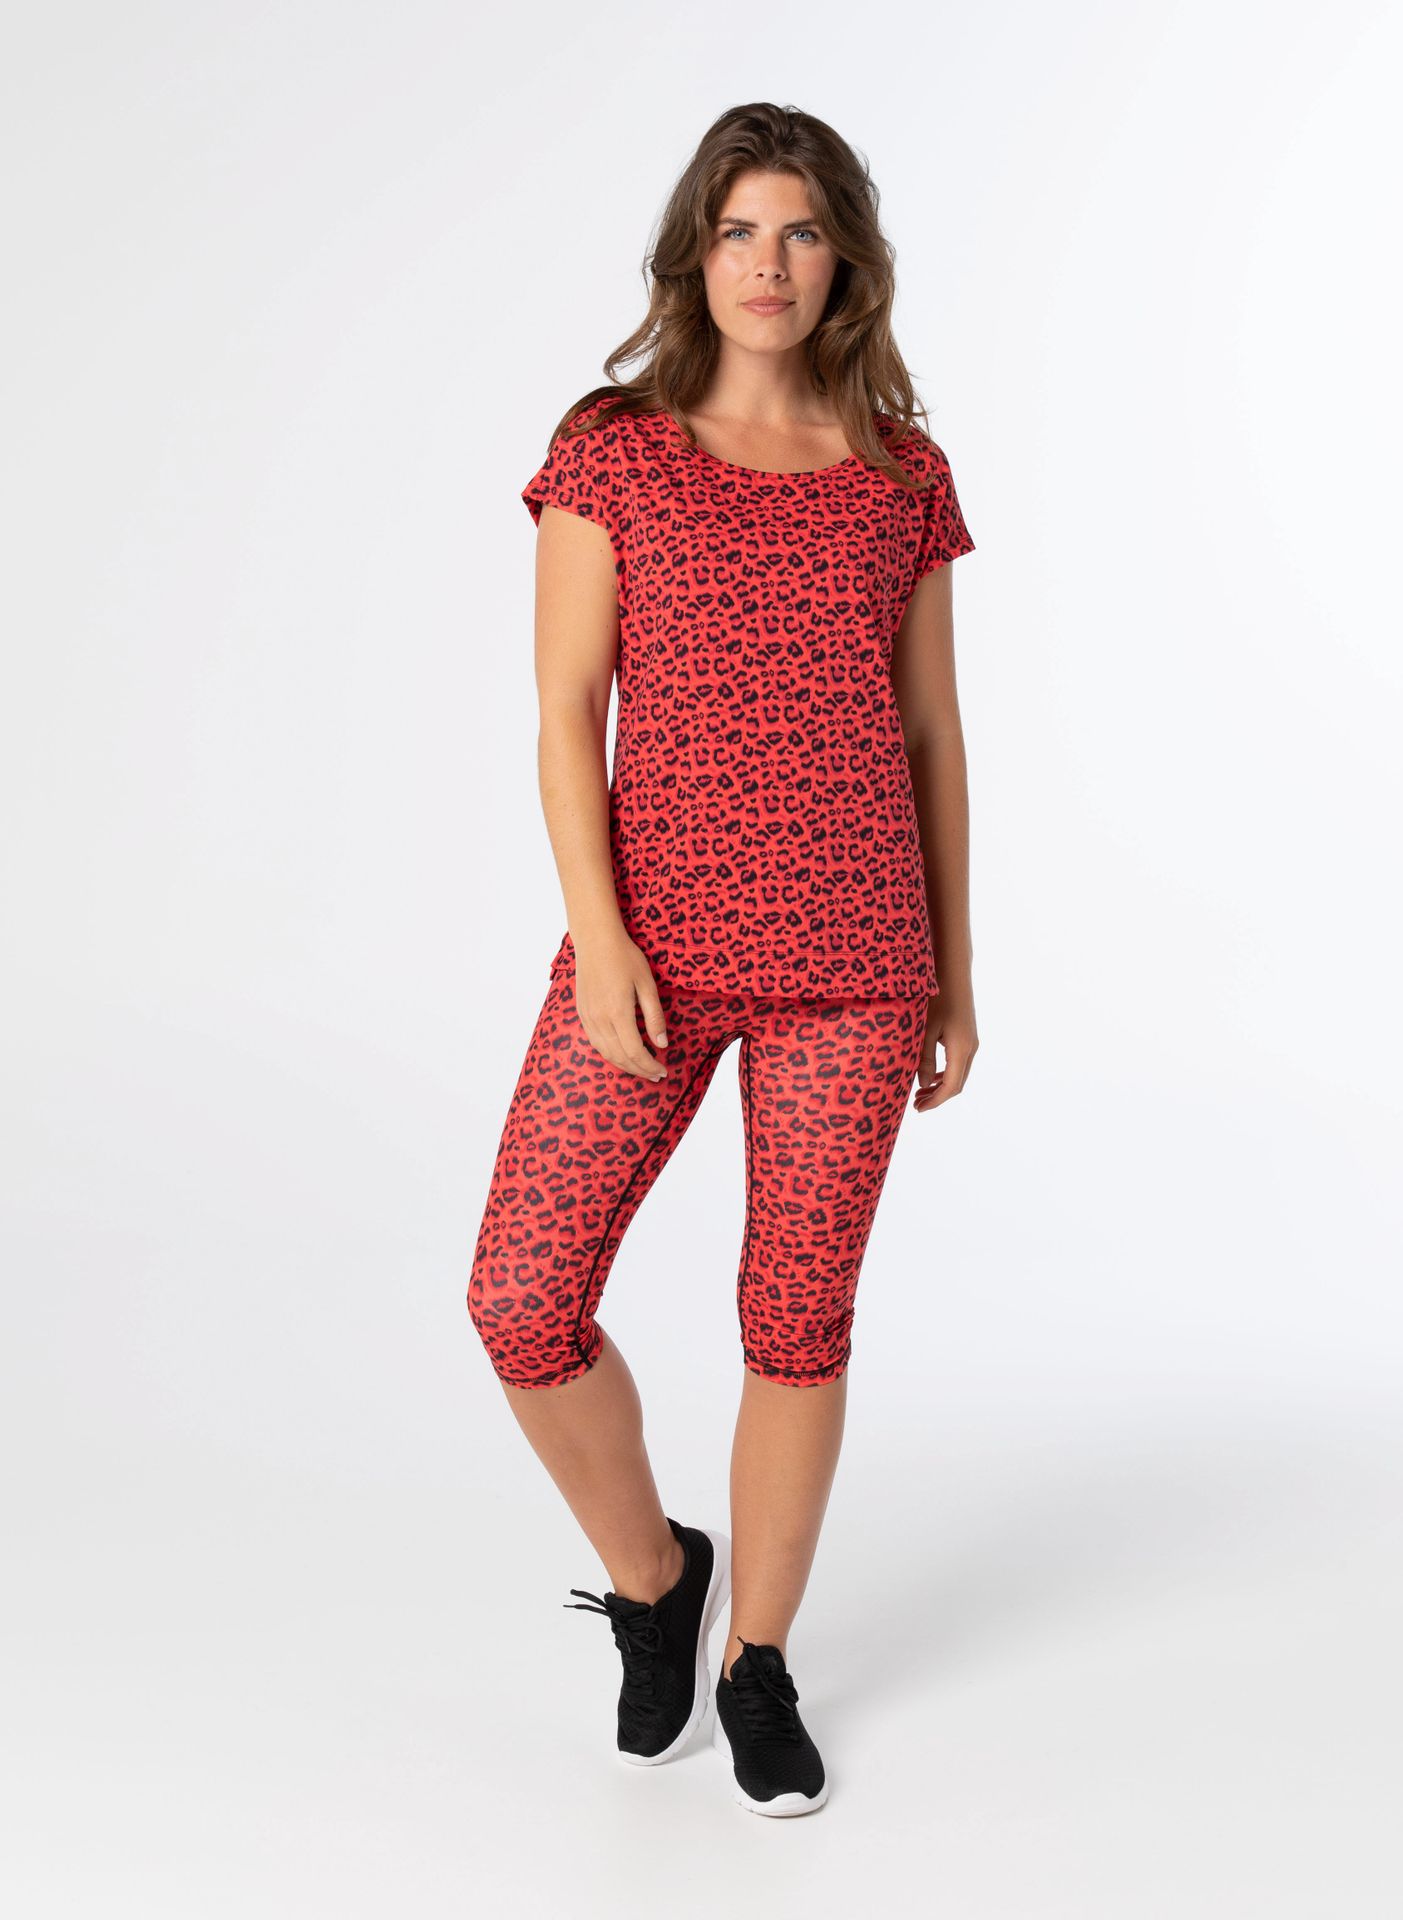 Norah Shirt - Activeawear red/black 211903-630